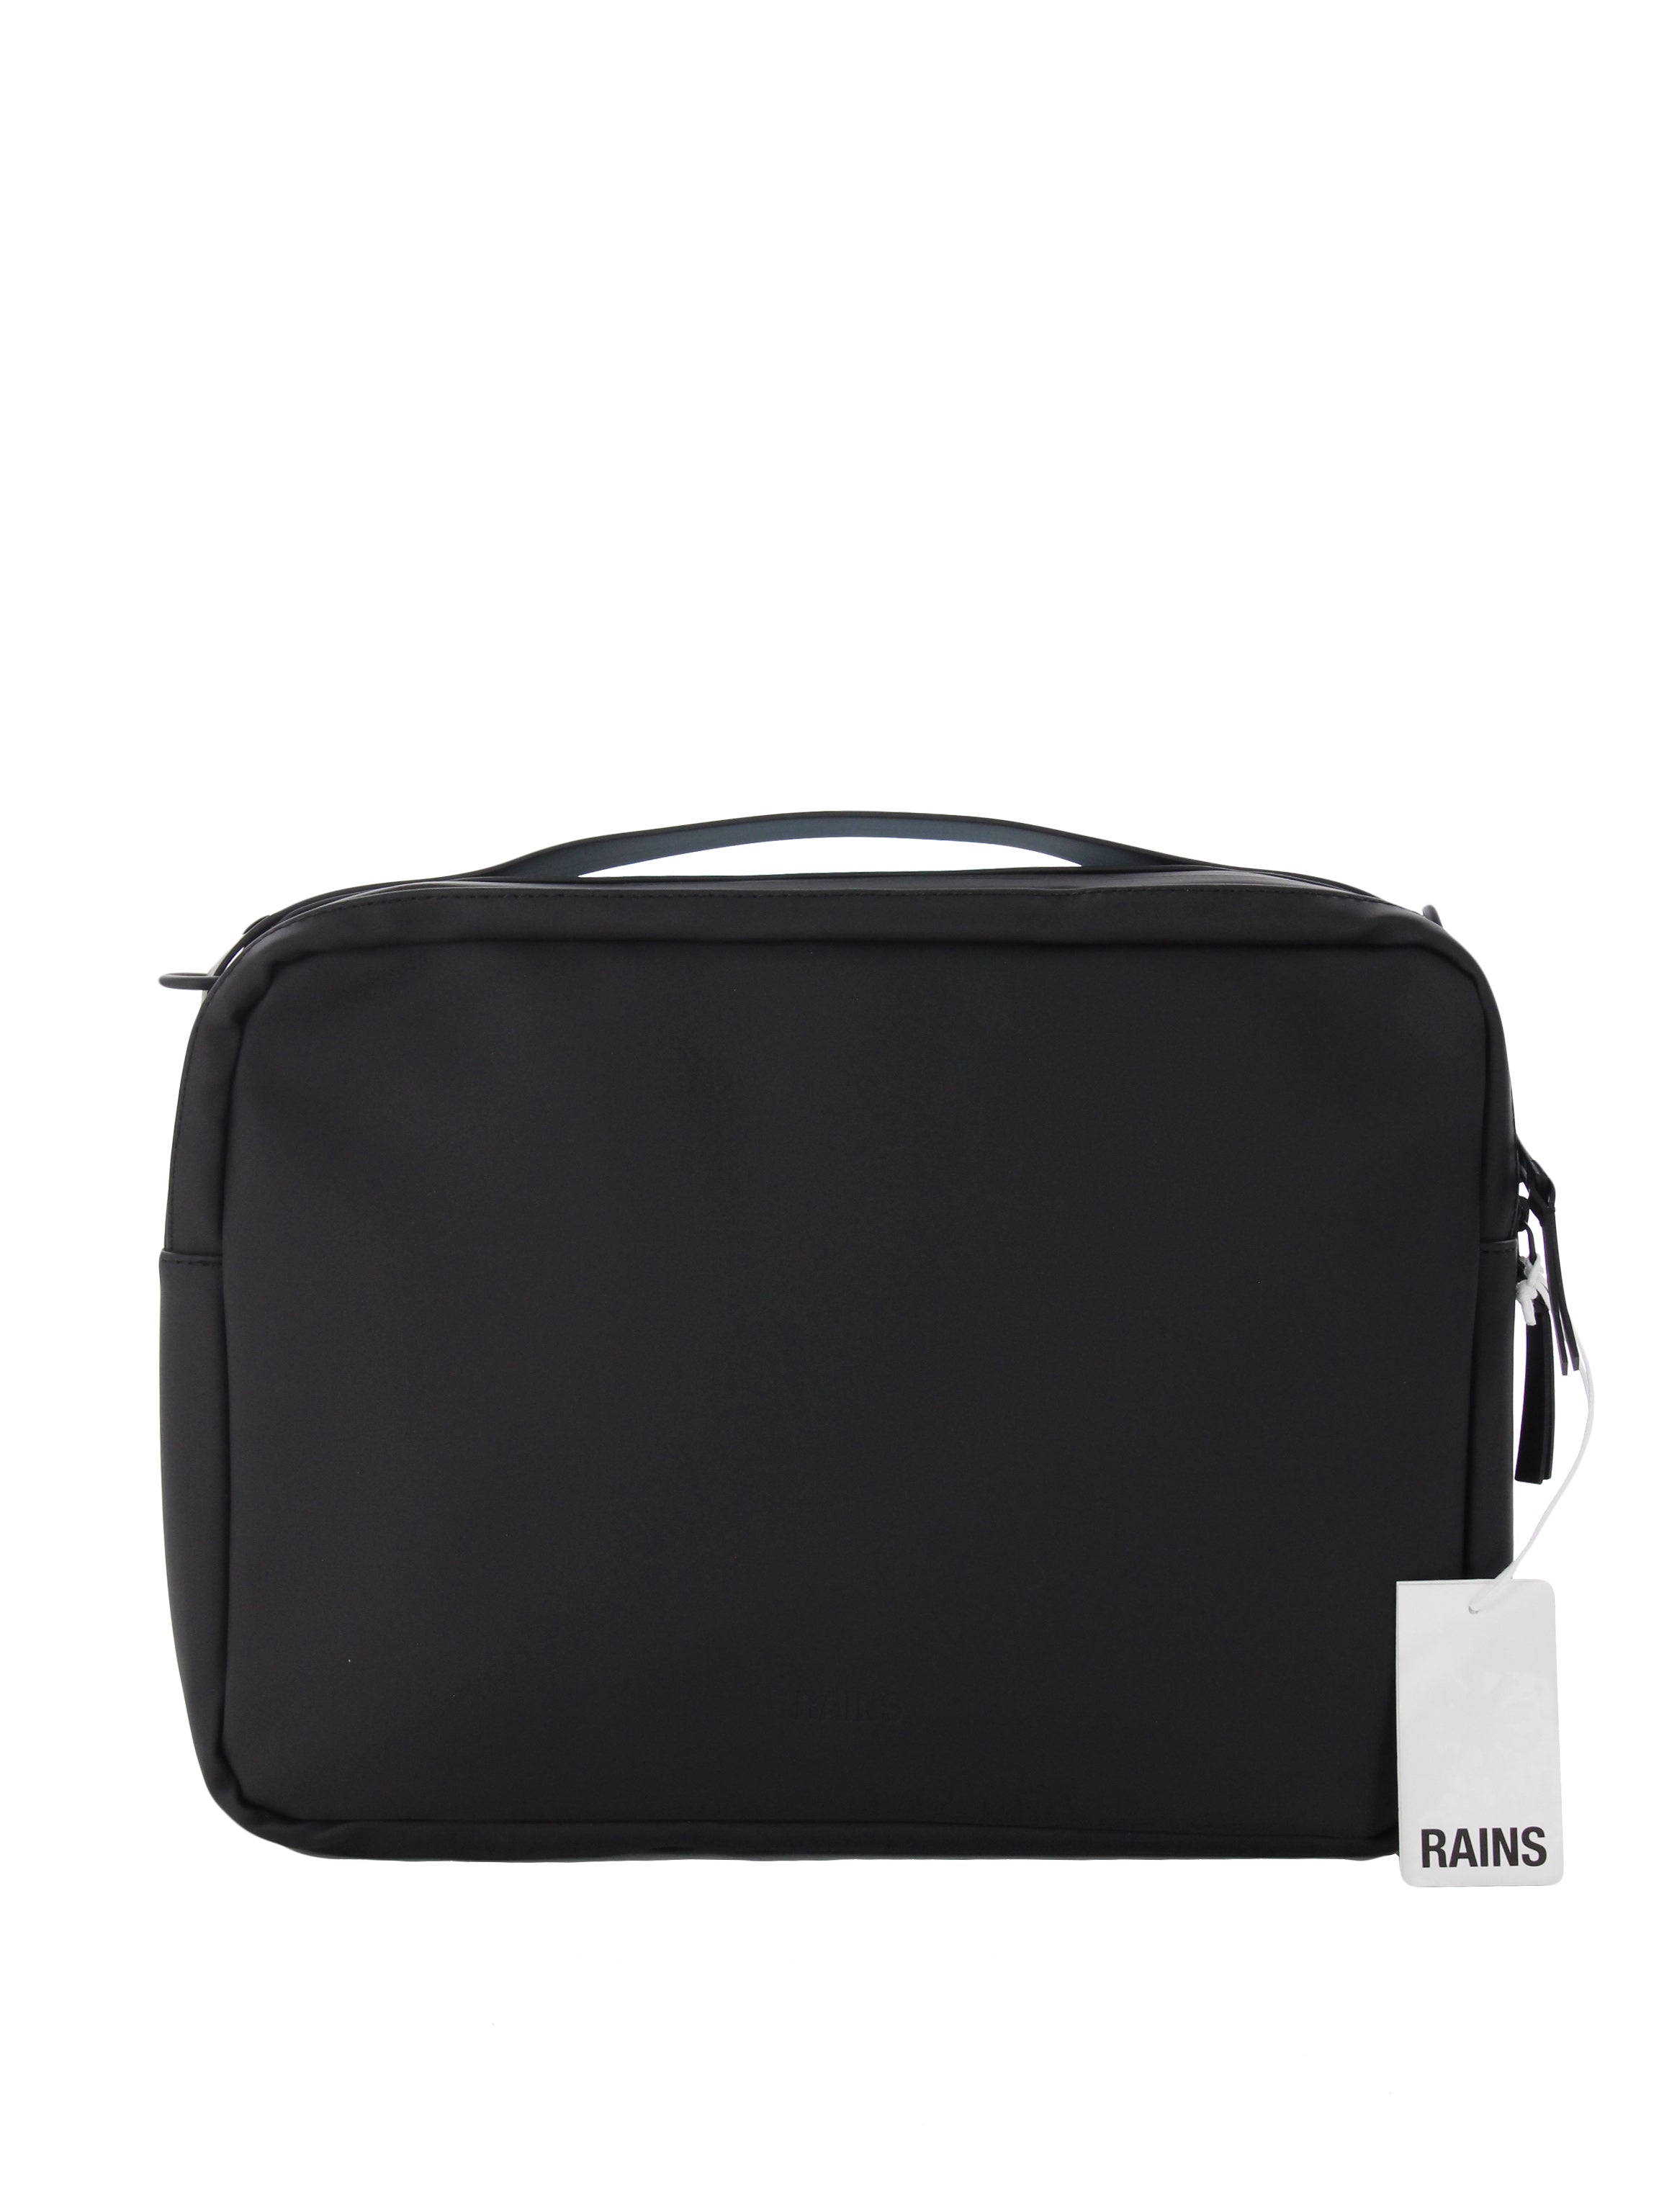 Bag Laptop Bag Black